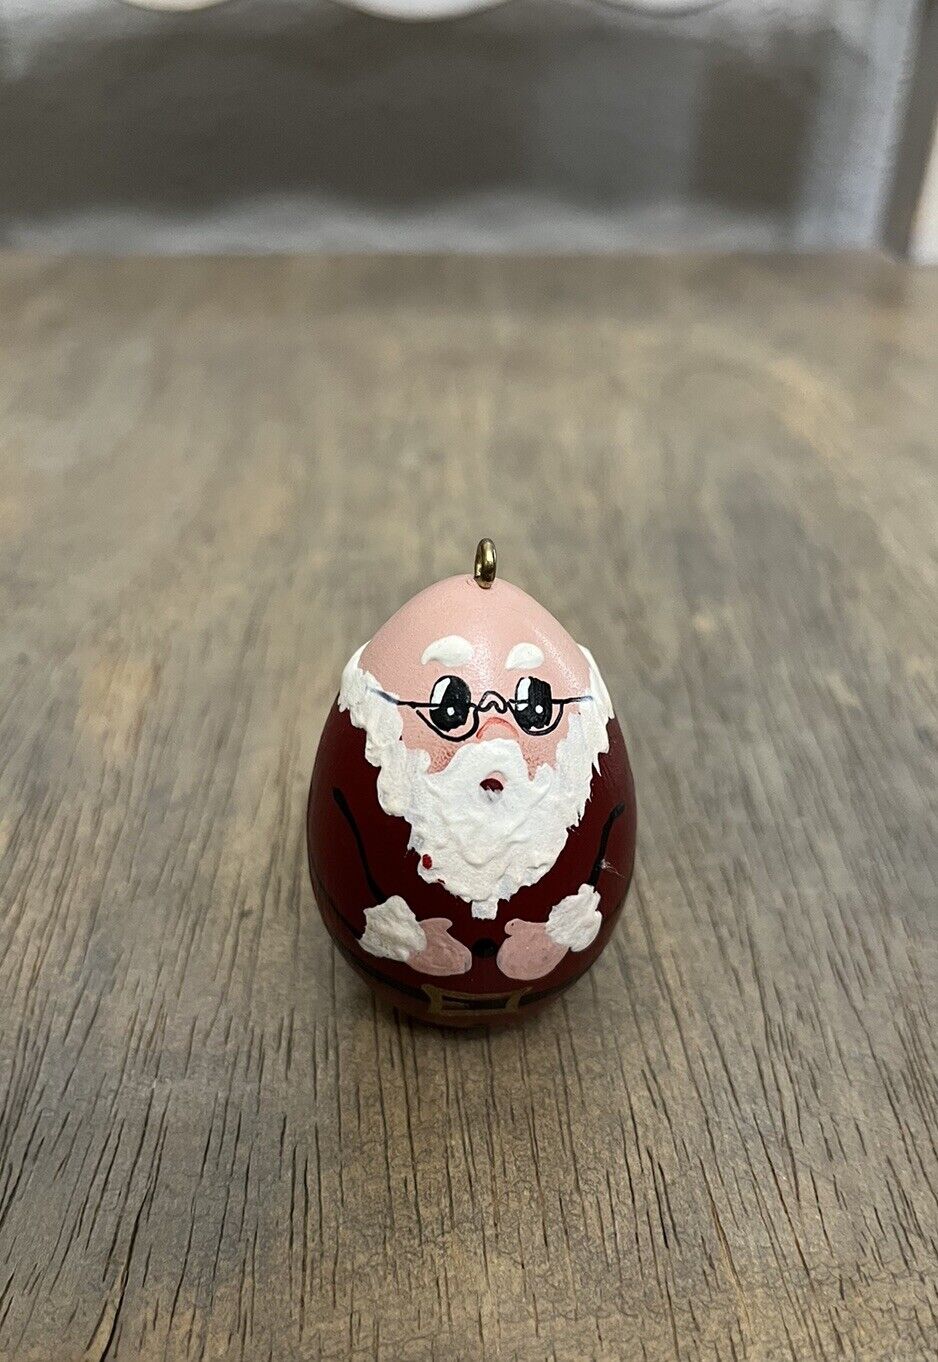 Folk Art Wooden Hand Painted Santa Claus Egg Christmas Figure Ornament